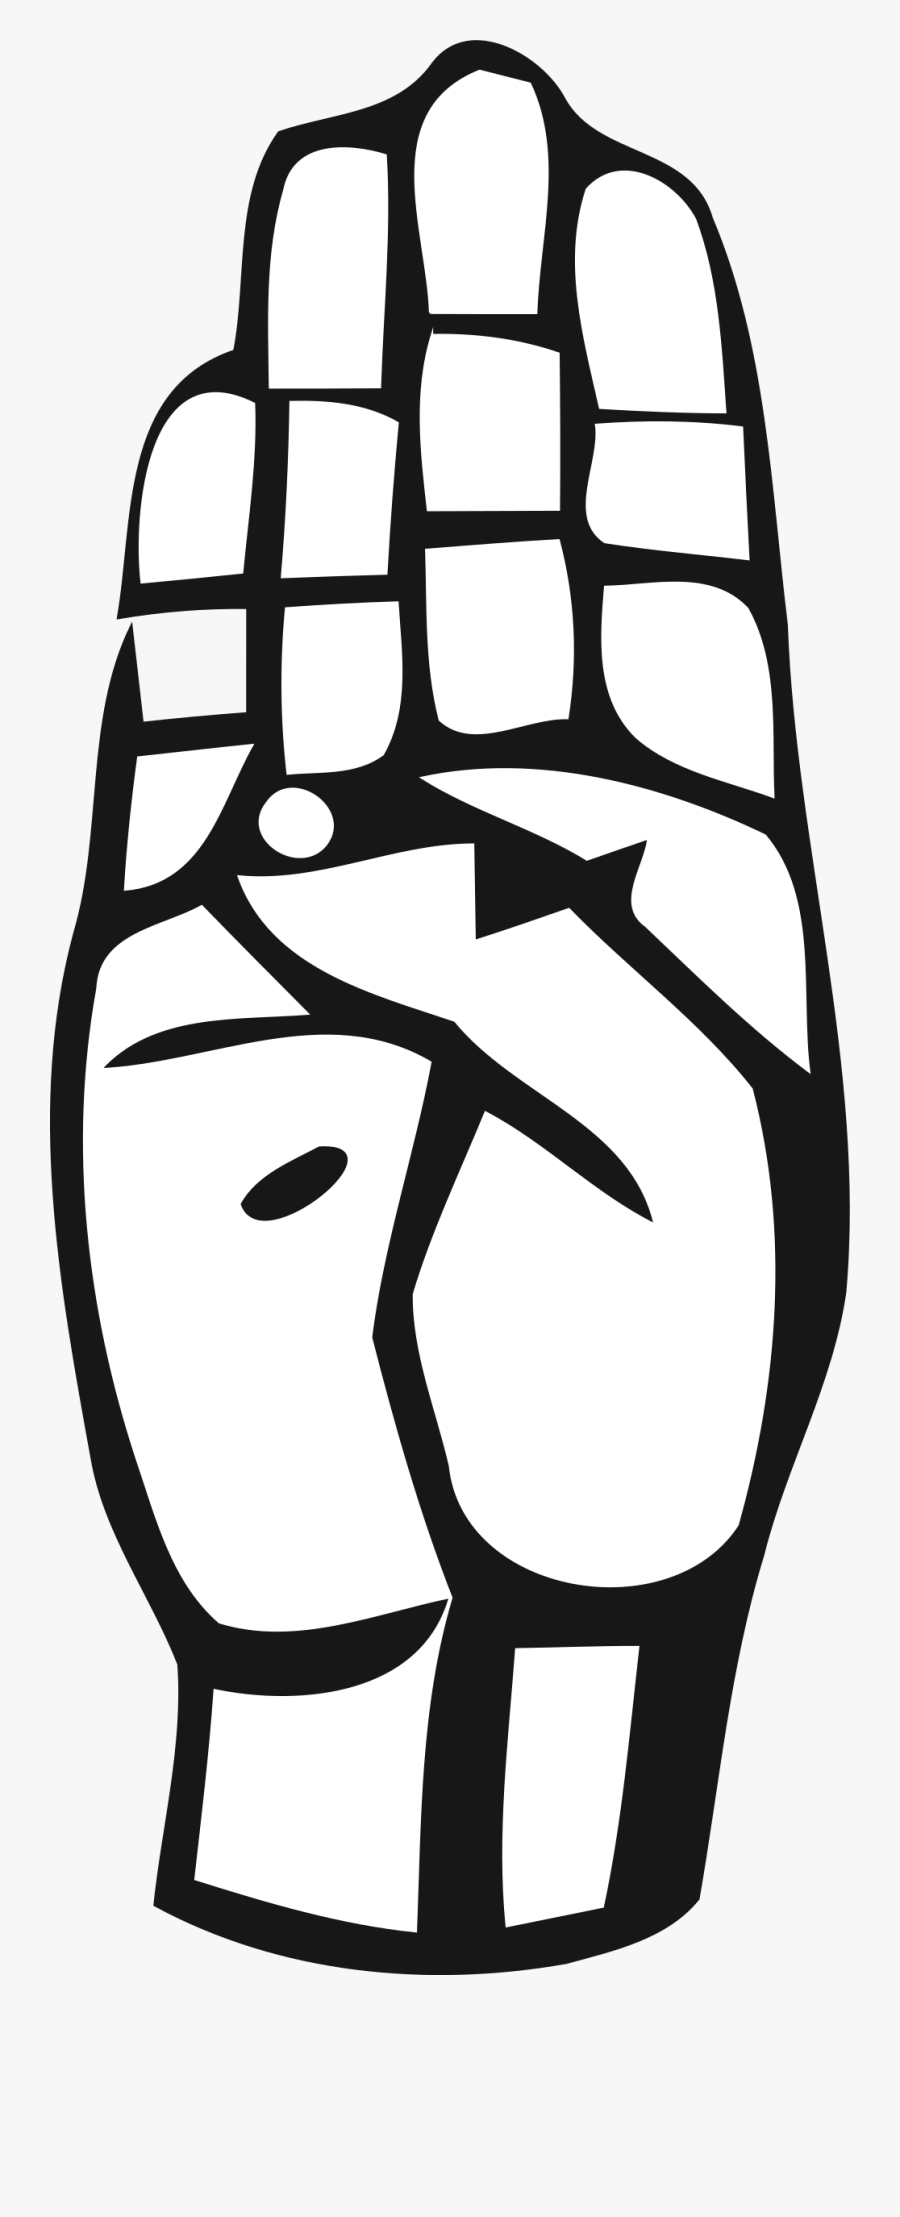 Clip Art Letter B In Sign Language - Sign Language B Clipart, Transparent Clipart